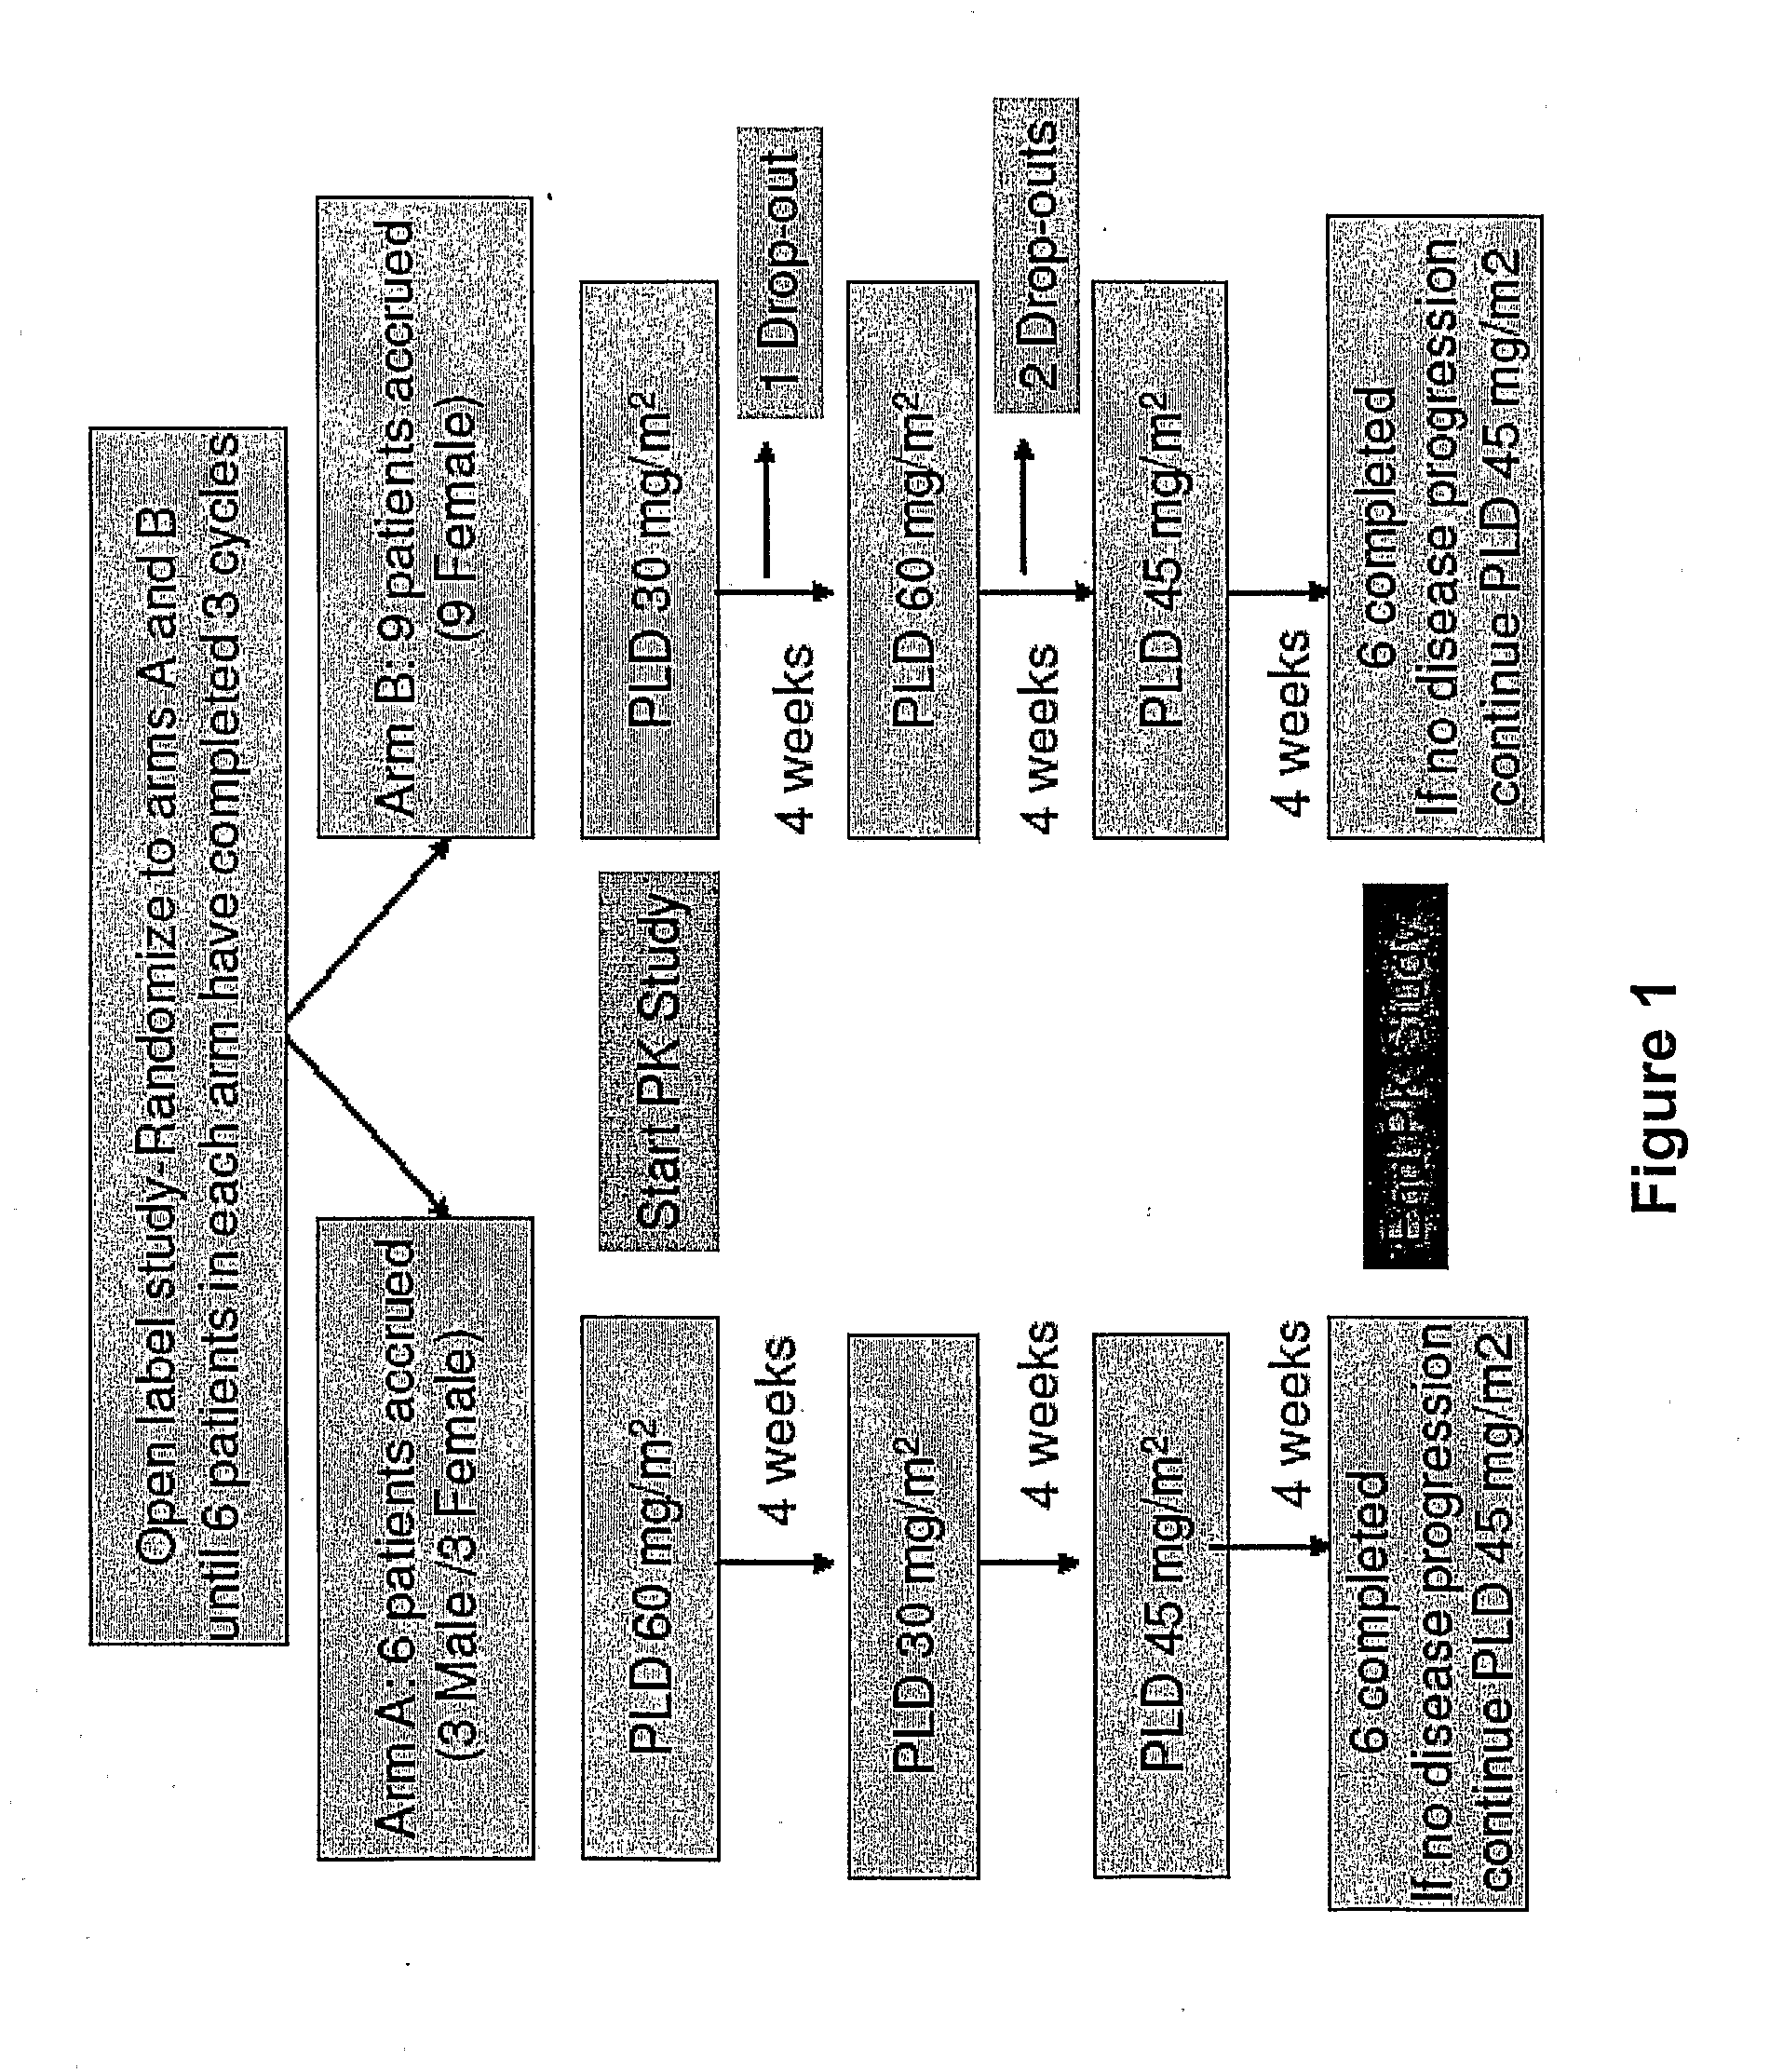 Method for administration of pegylated liposomal doxorubicin